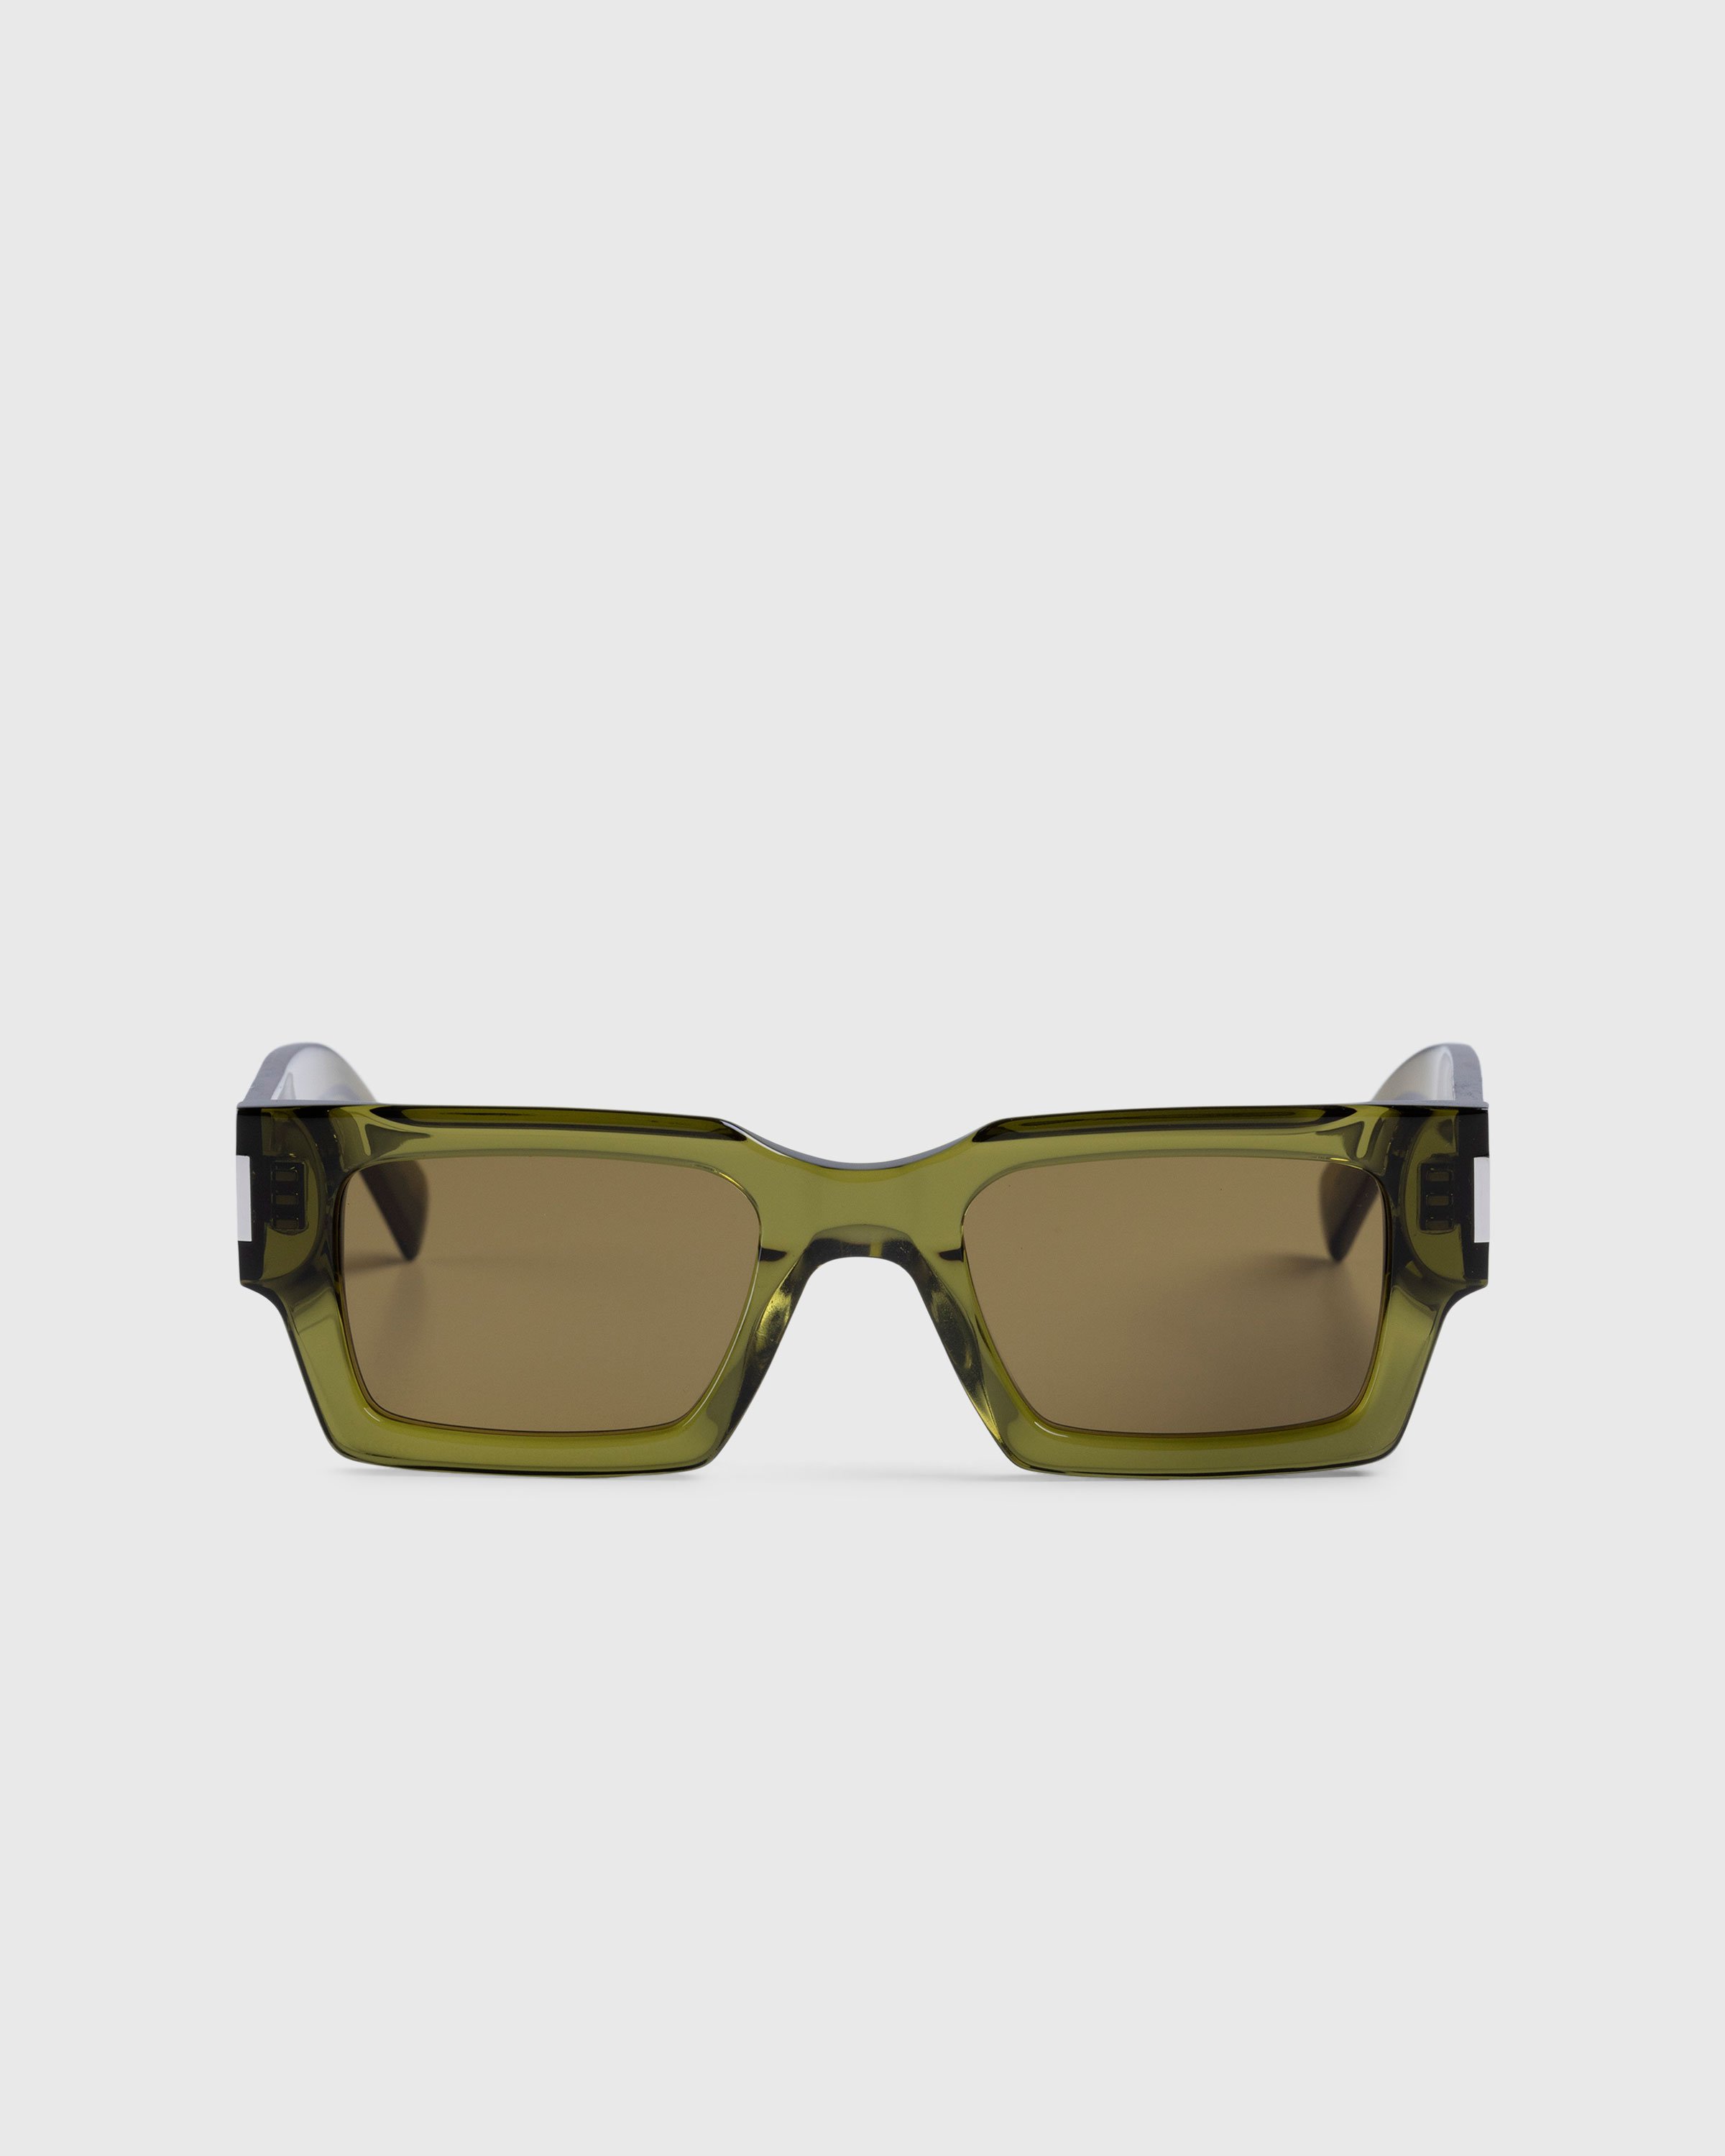 Saint Laurent - SL 572 Square Frame Sunglasses Green/Brown - Accessories - Multi - Image 1